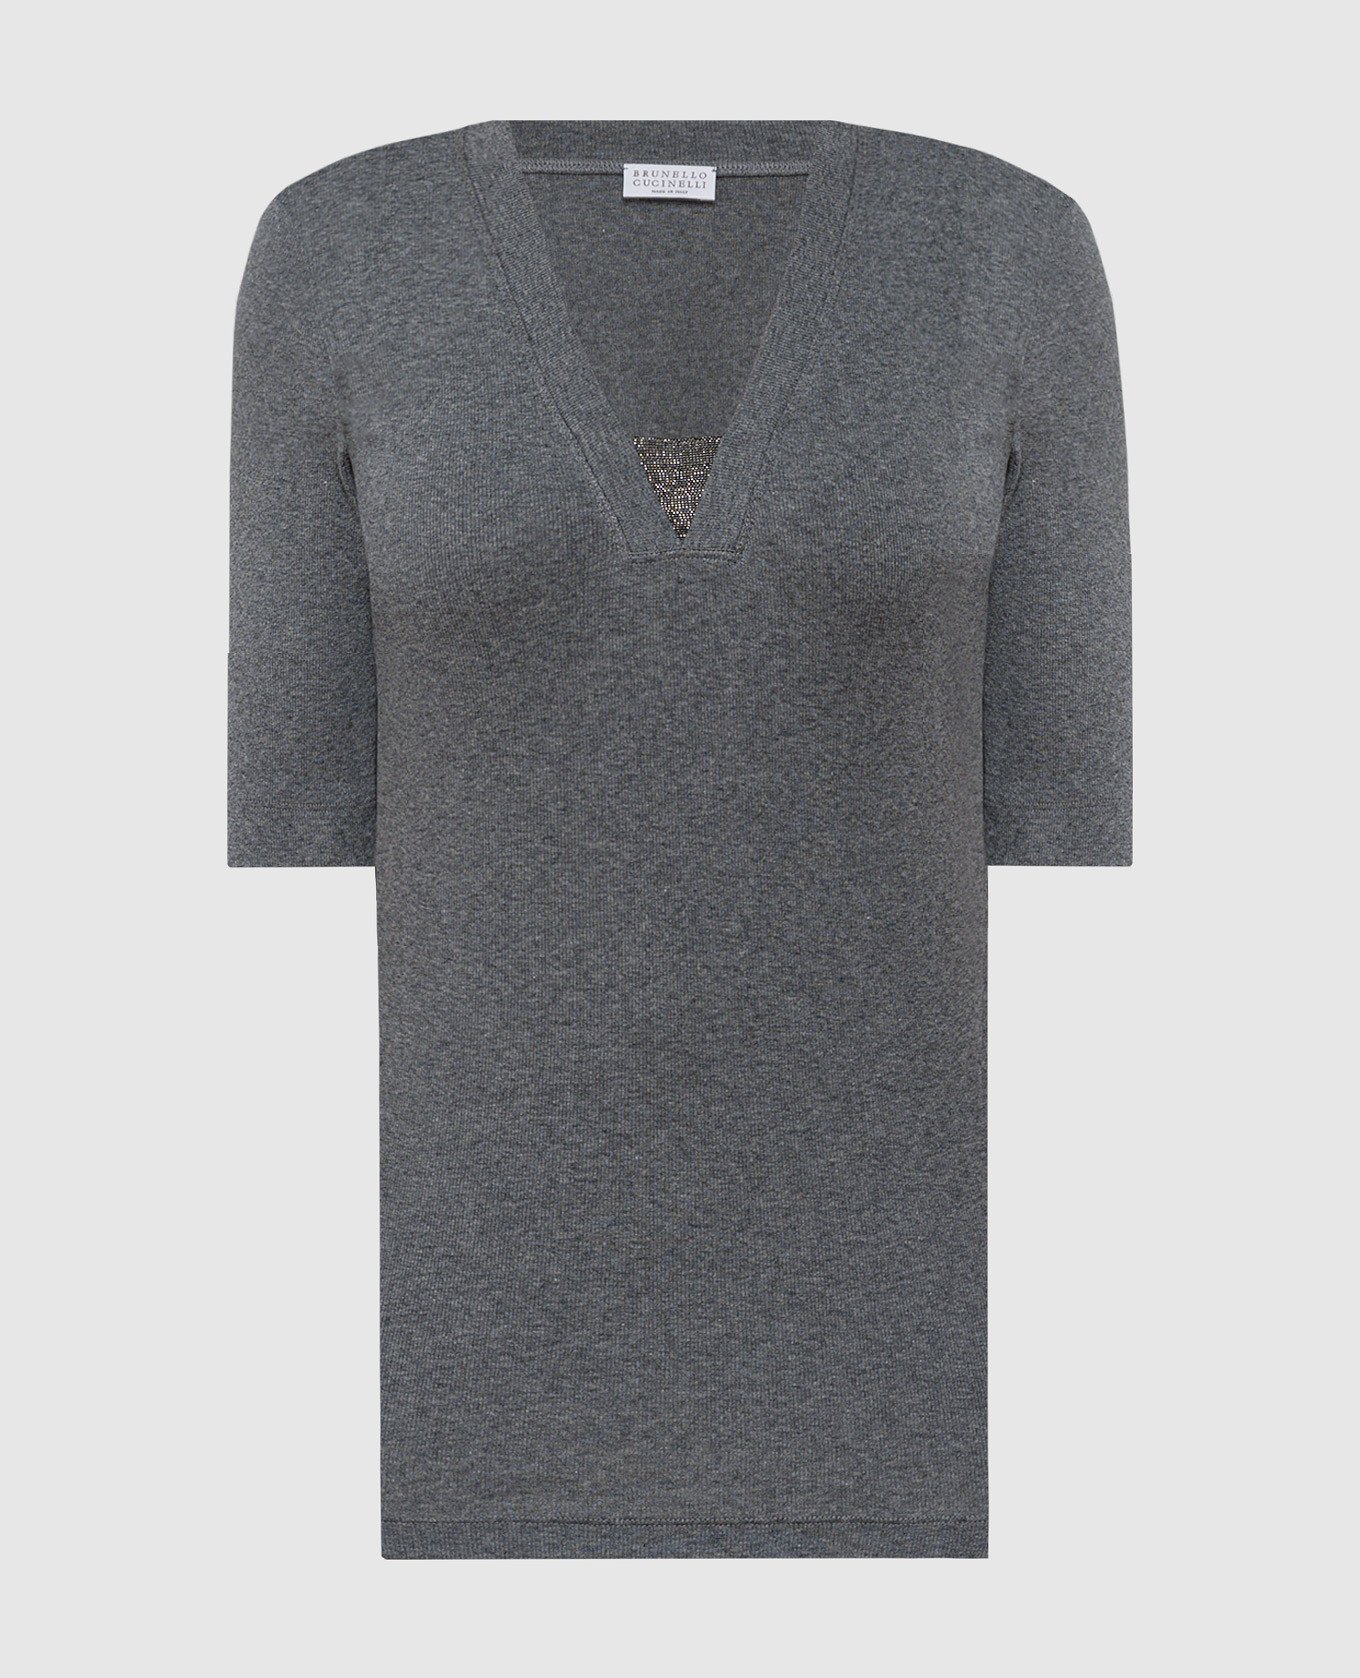 Gray t-shirt with monil chain made of ecolathuni